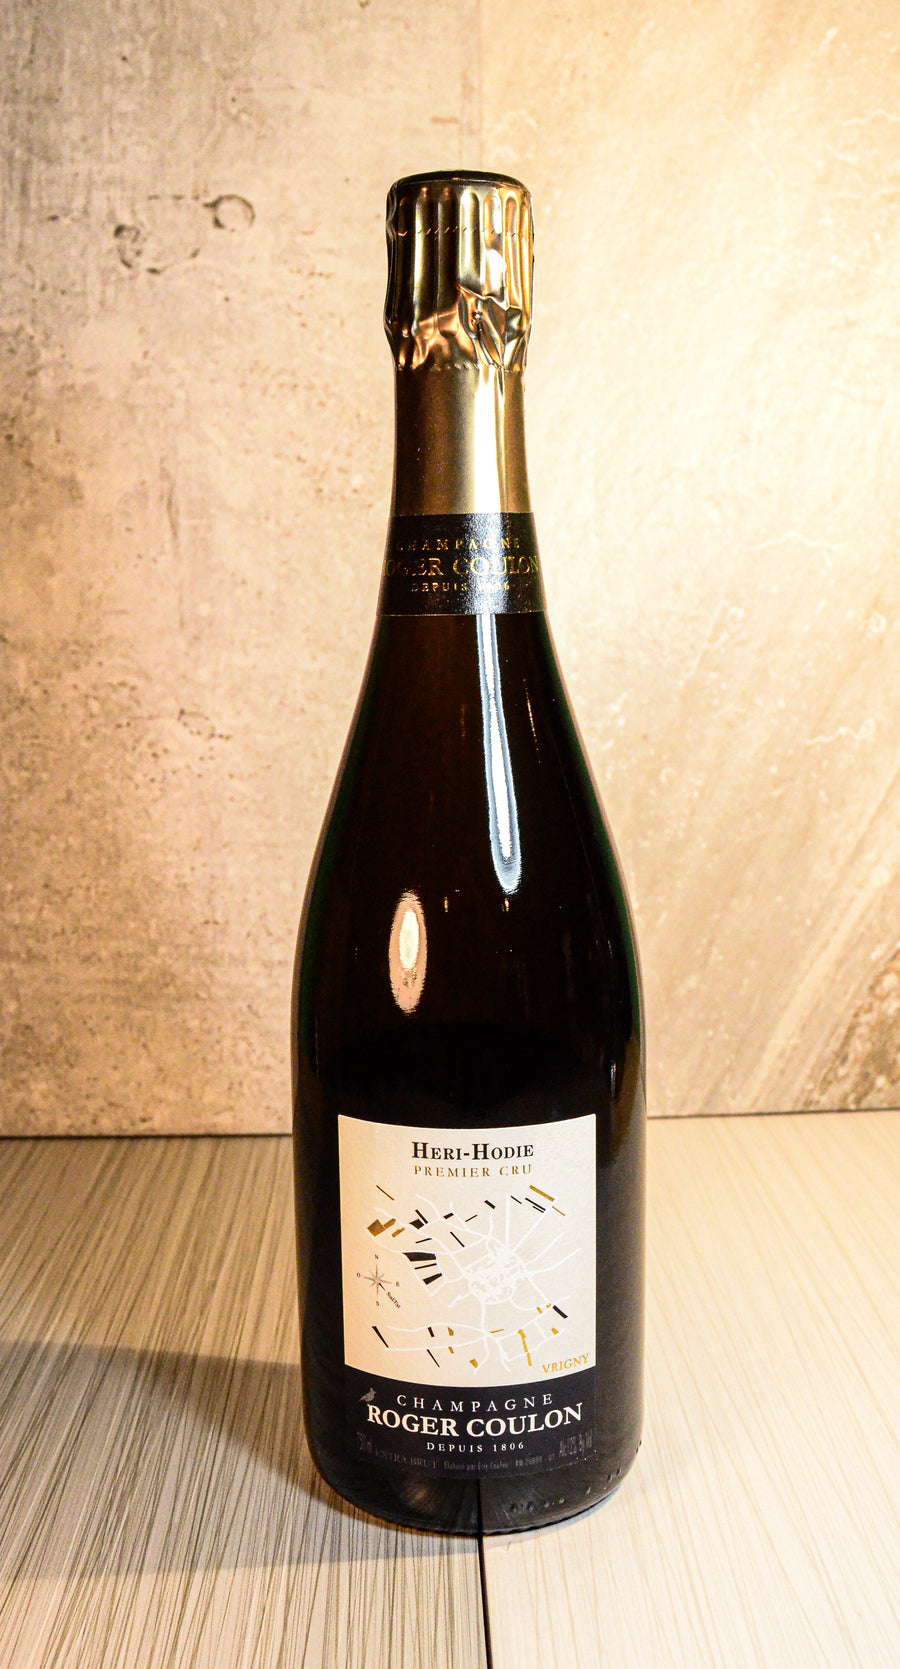 Roger Coulon, Heri-Hodie Premier Cru Champagne Extra Brut